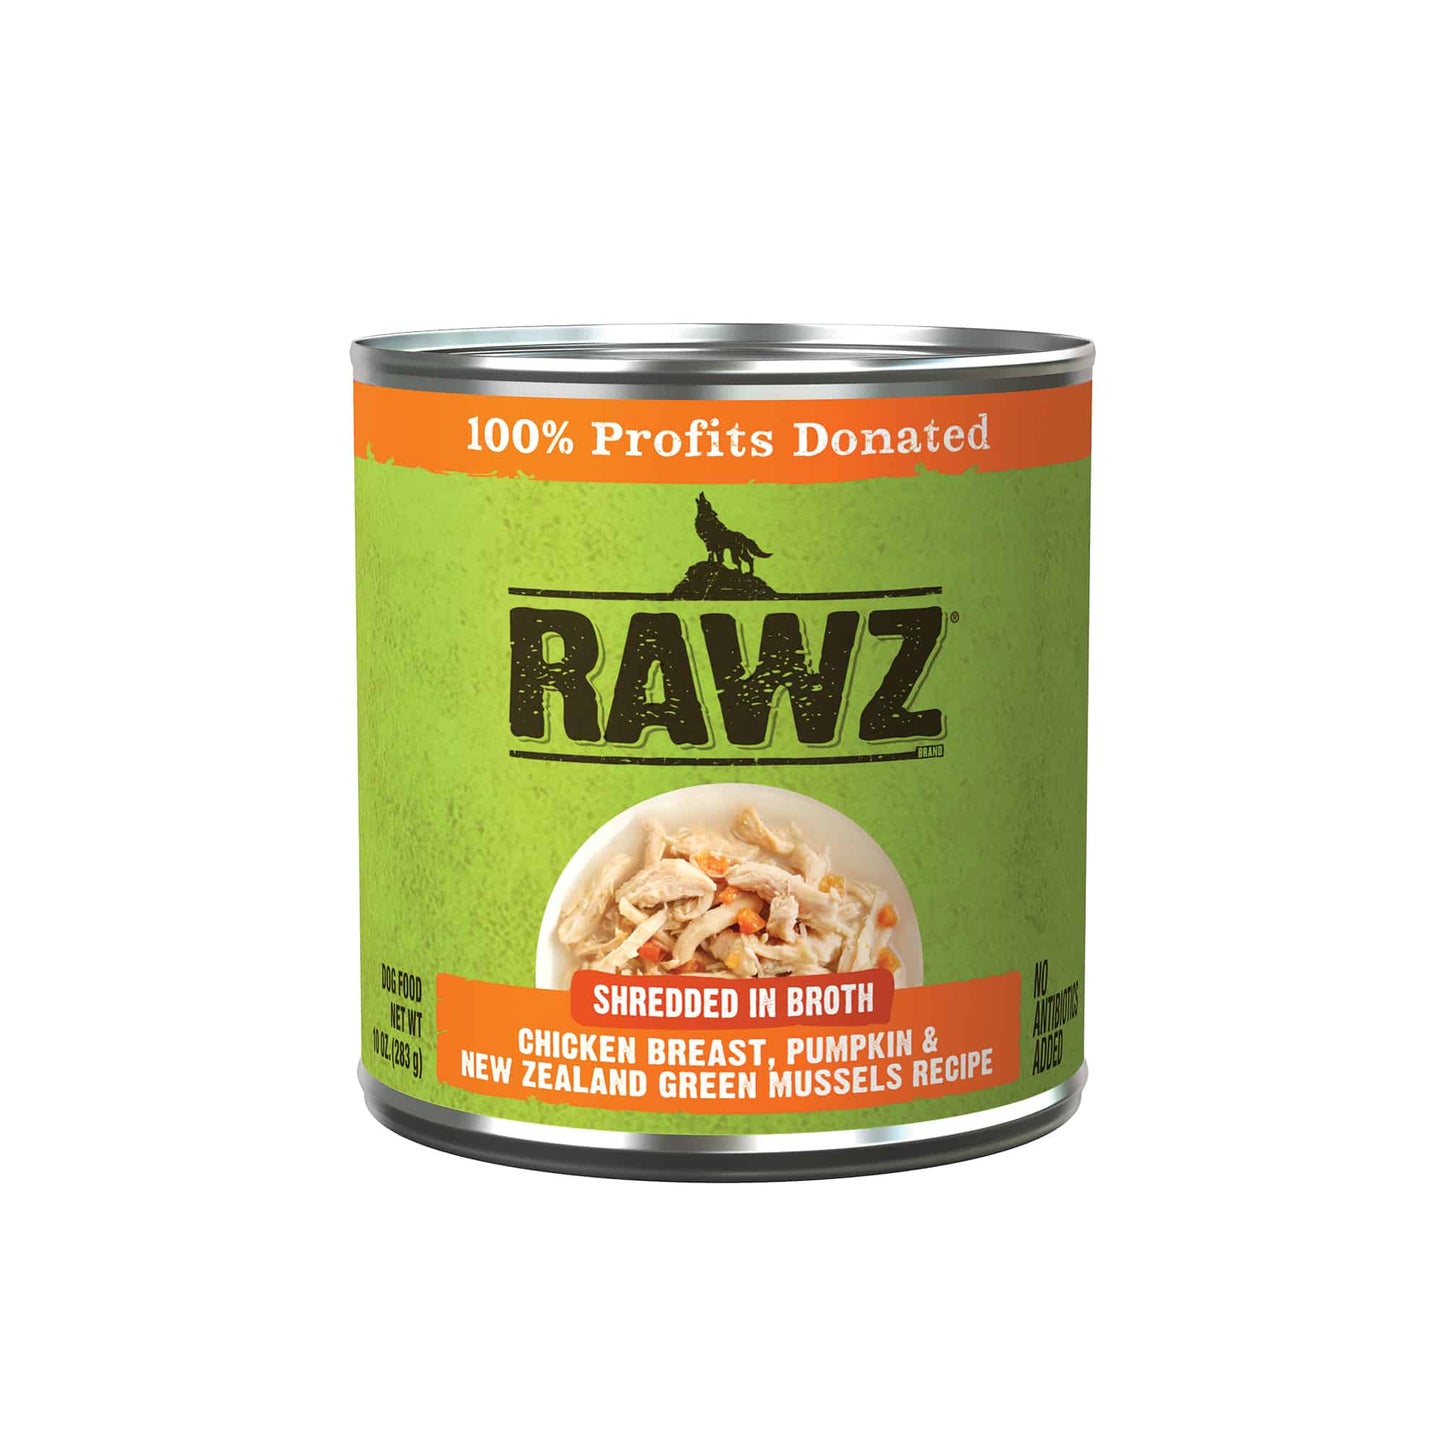 Rawz Shredded Chicken, Pumpkin & New Zealand Green Mussels for dogs